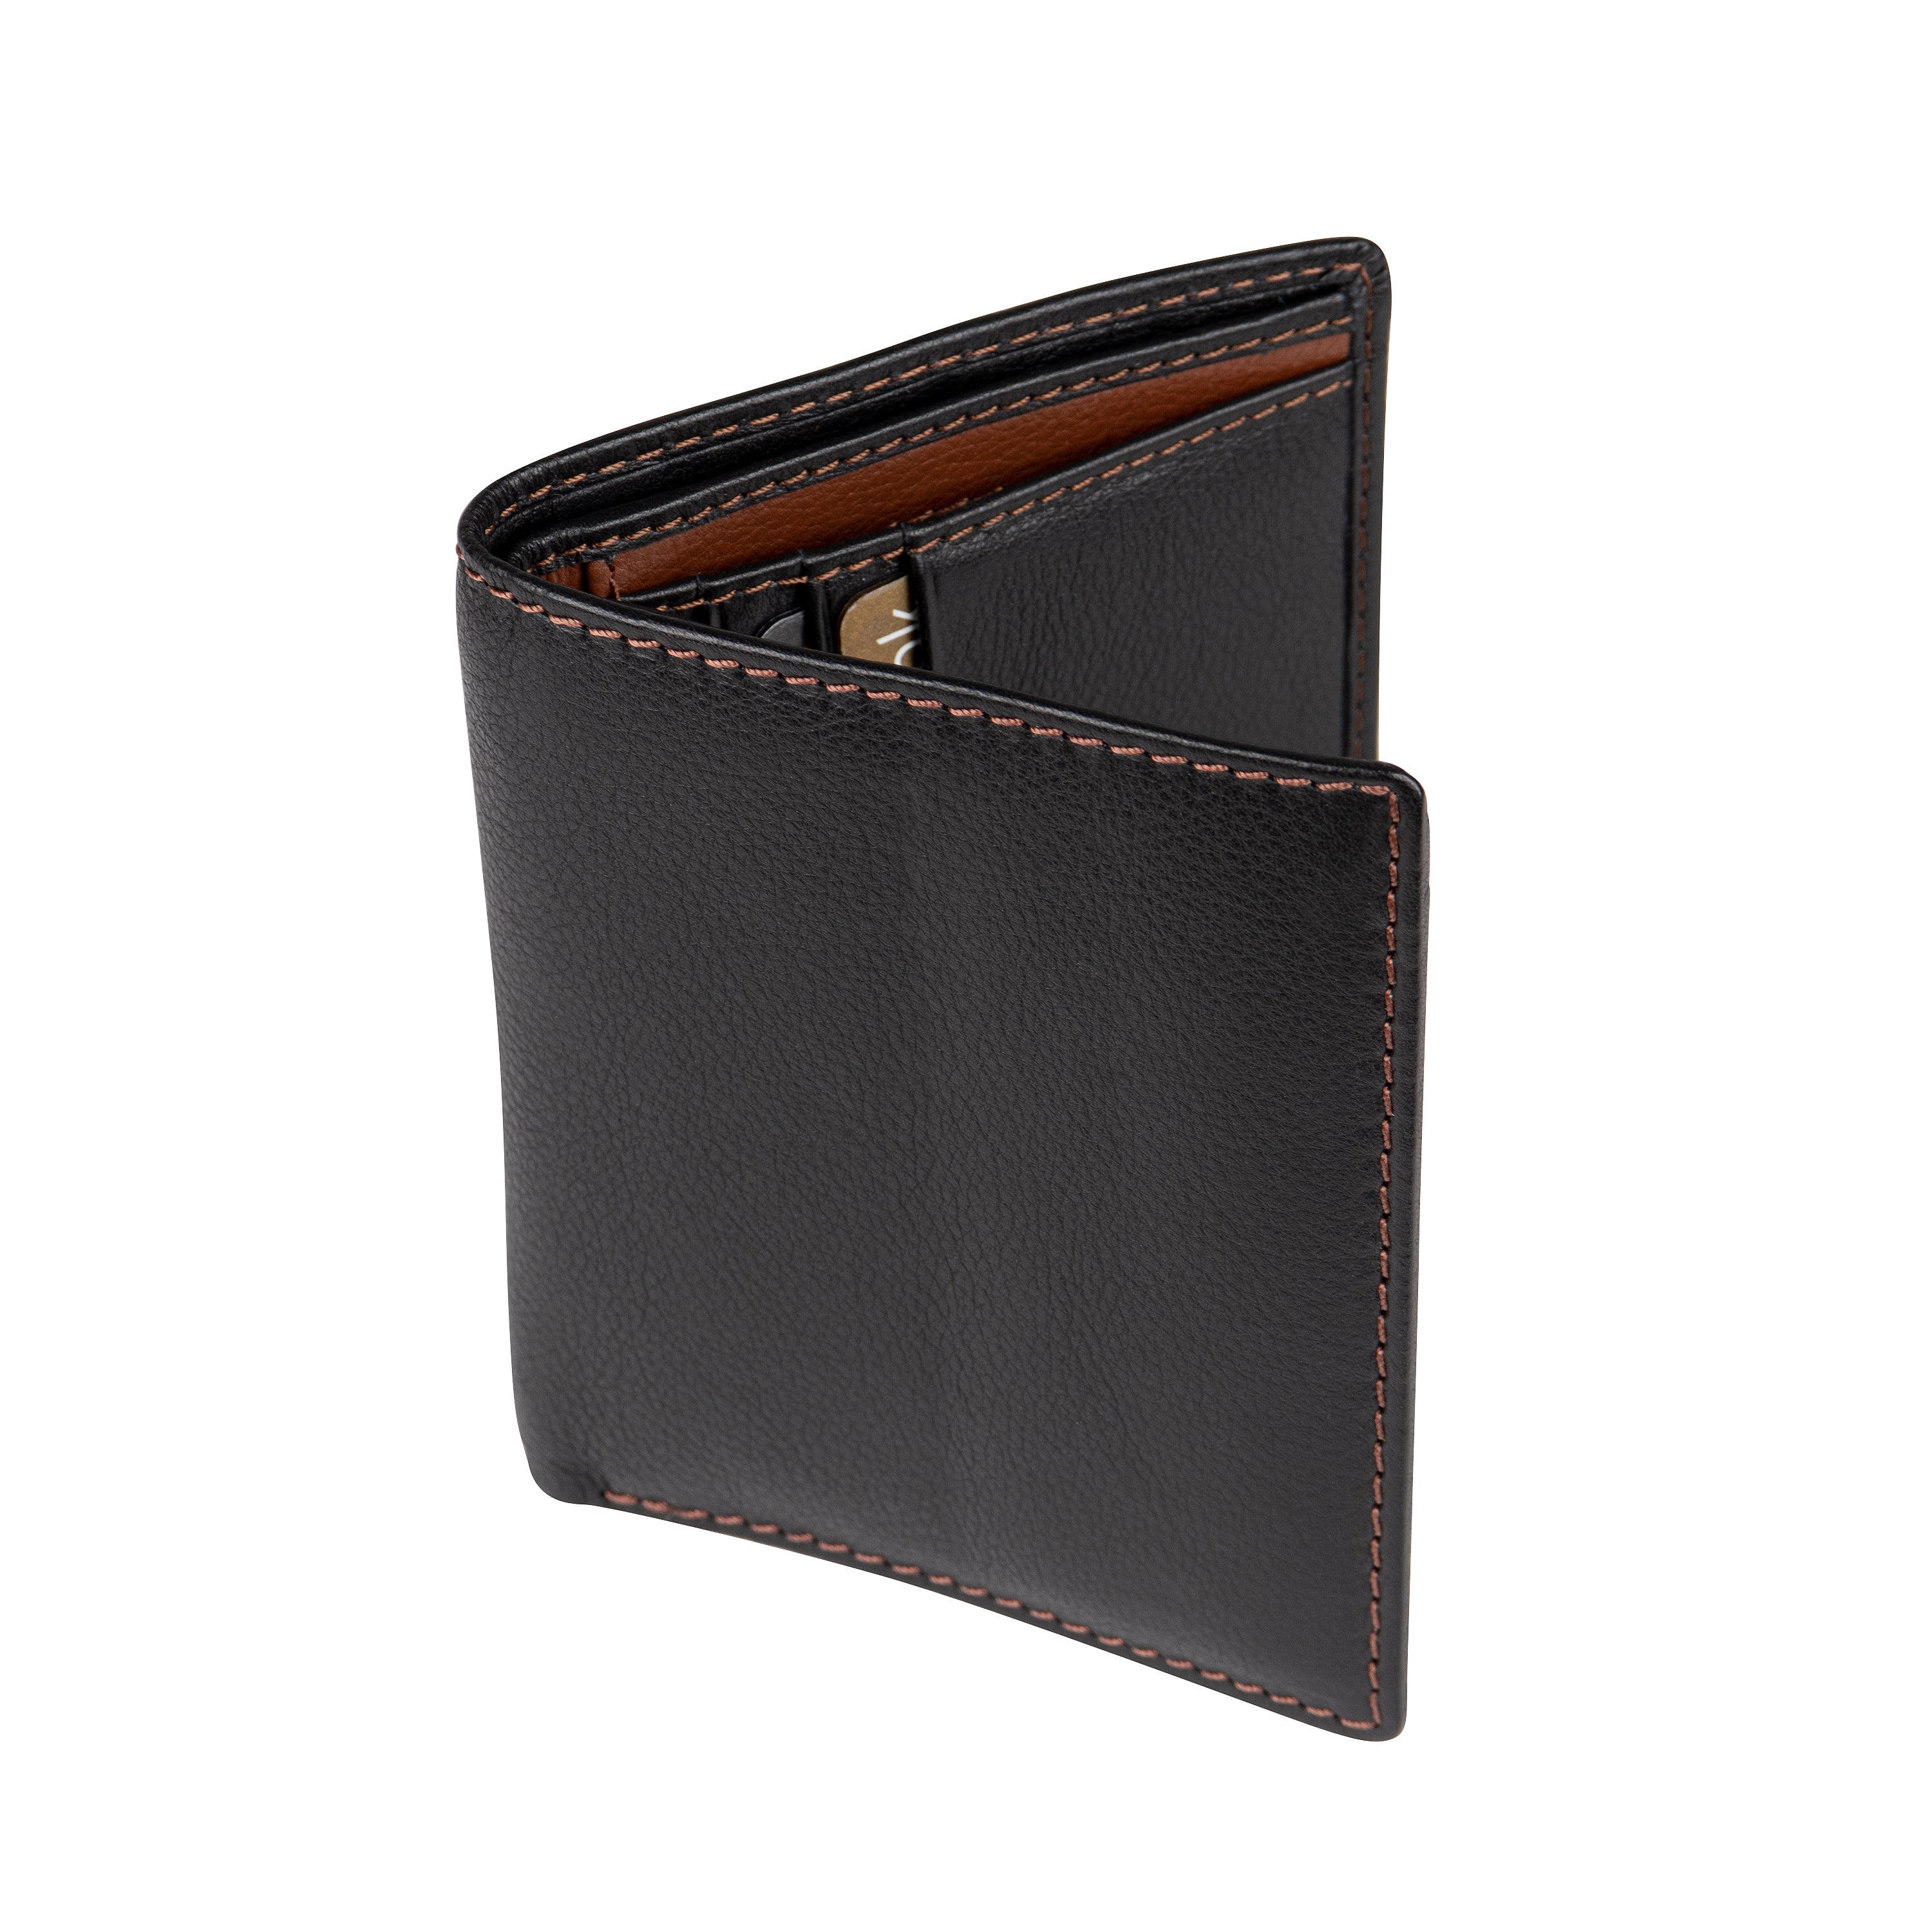 Elegant men's wallet with credit card slots, cognac brown